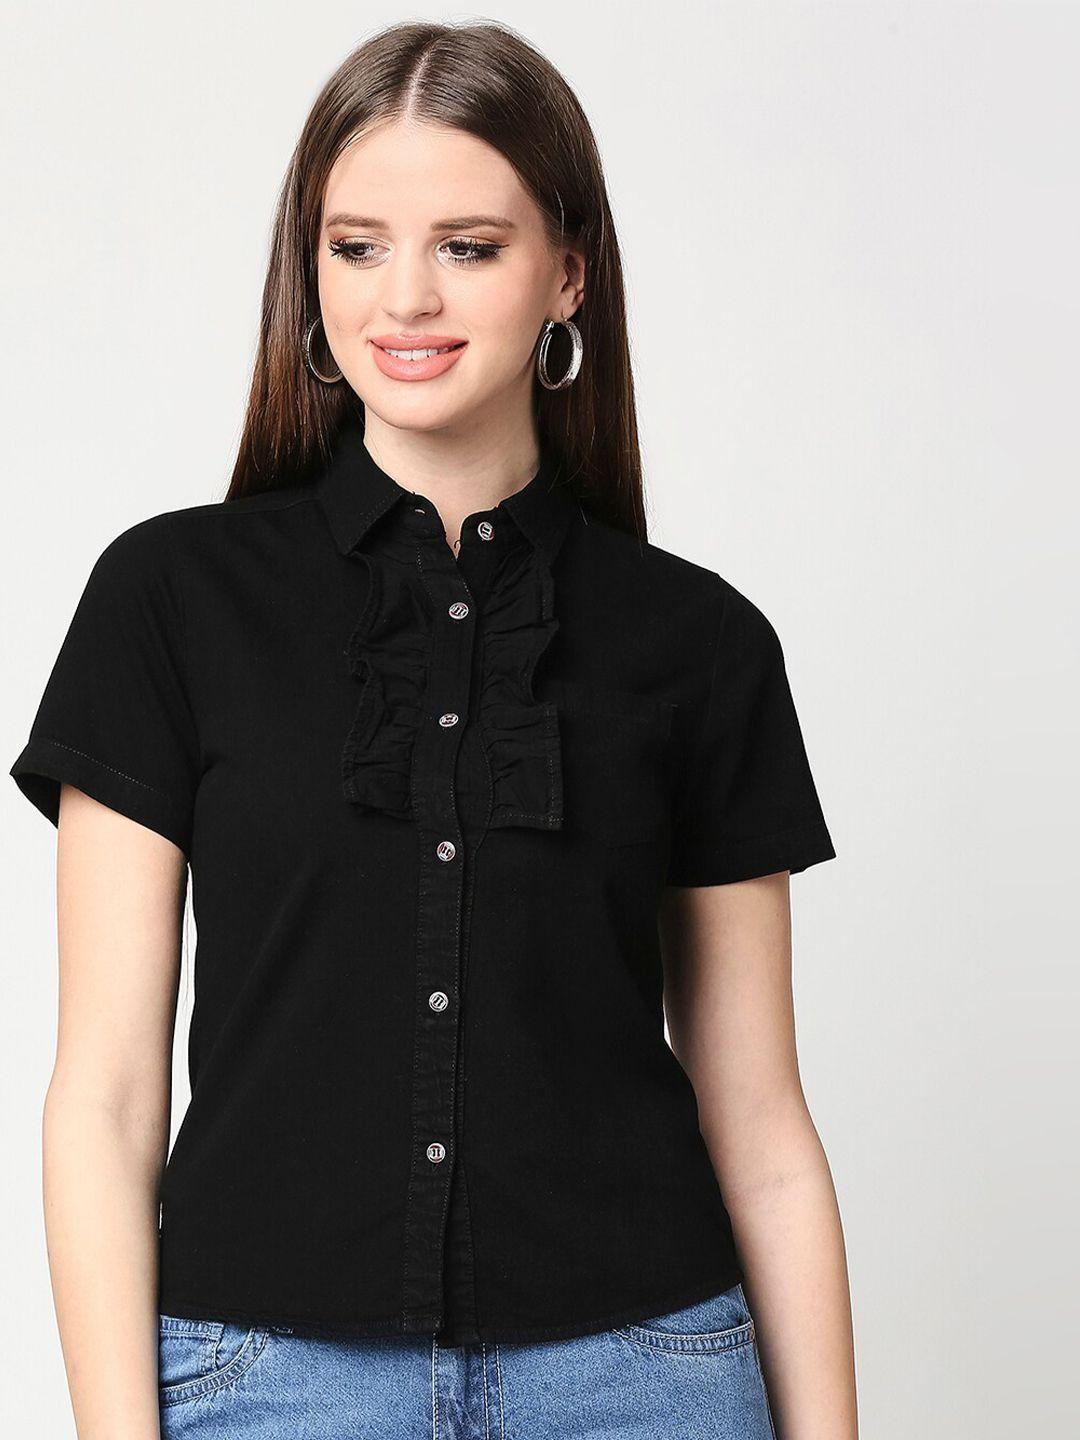 high star women black ruffles denim shirt style top